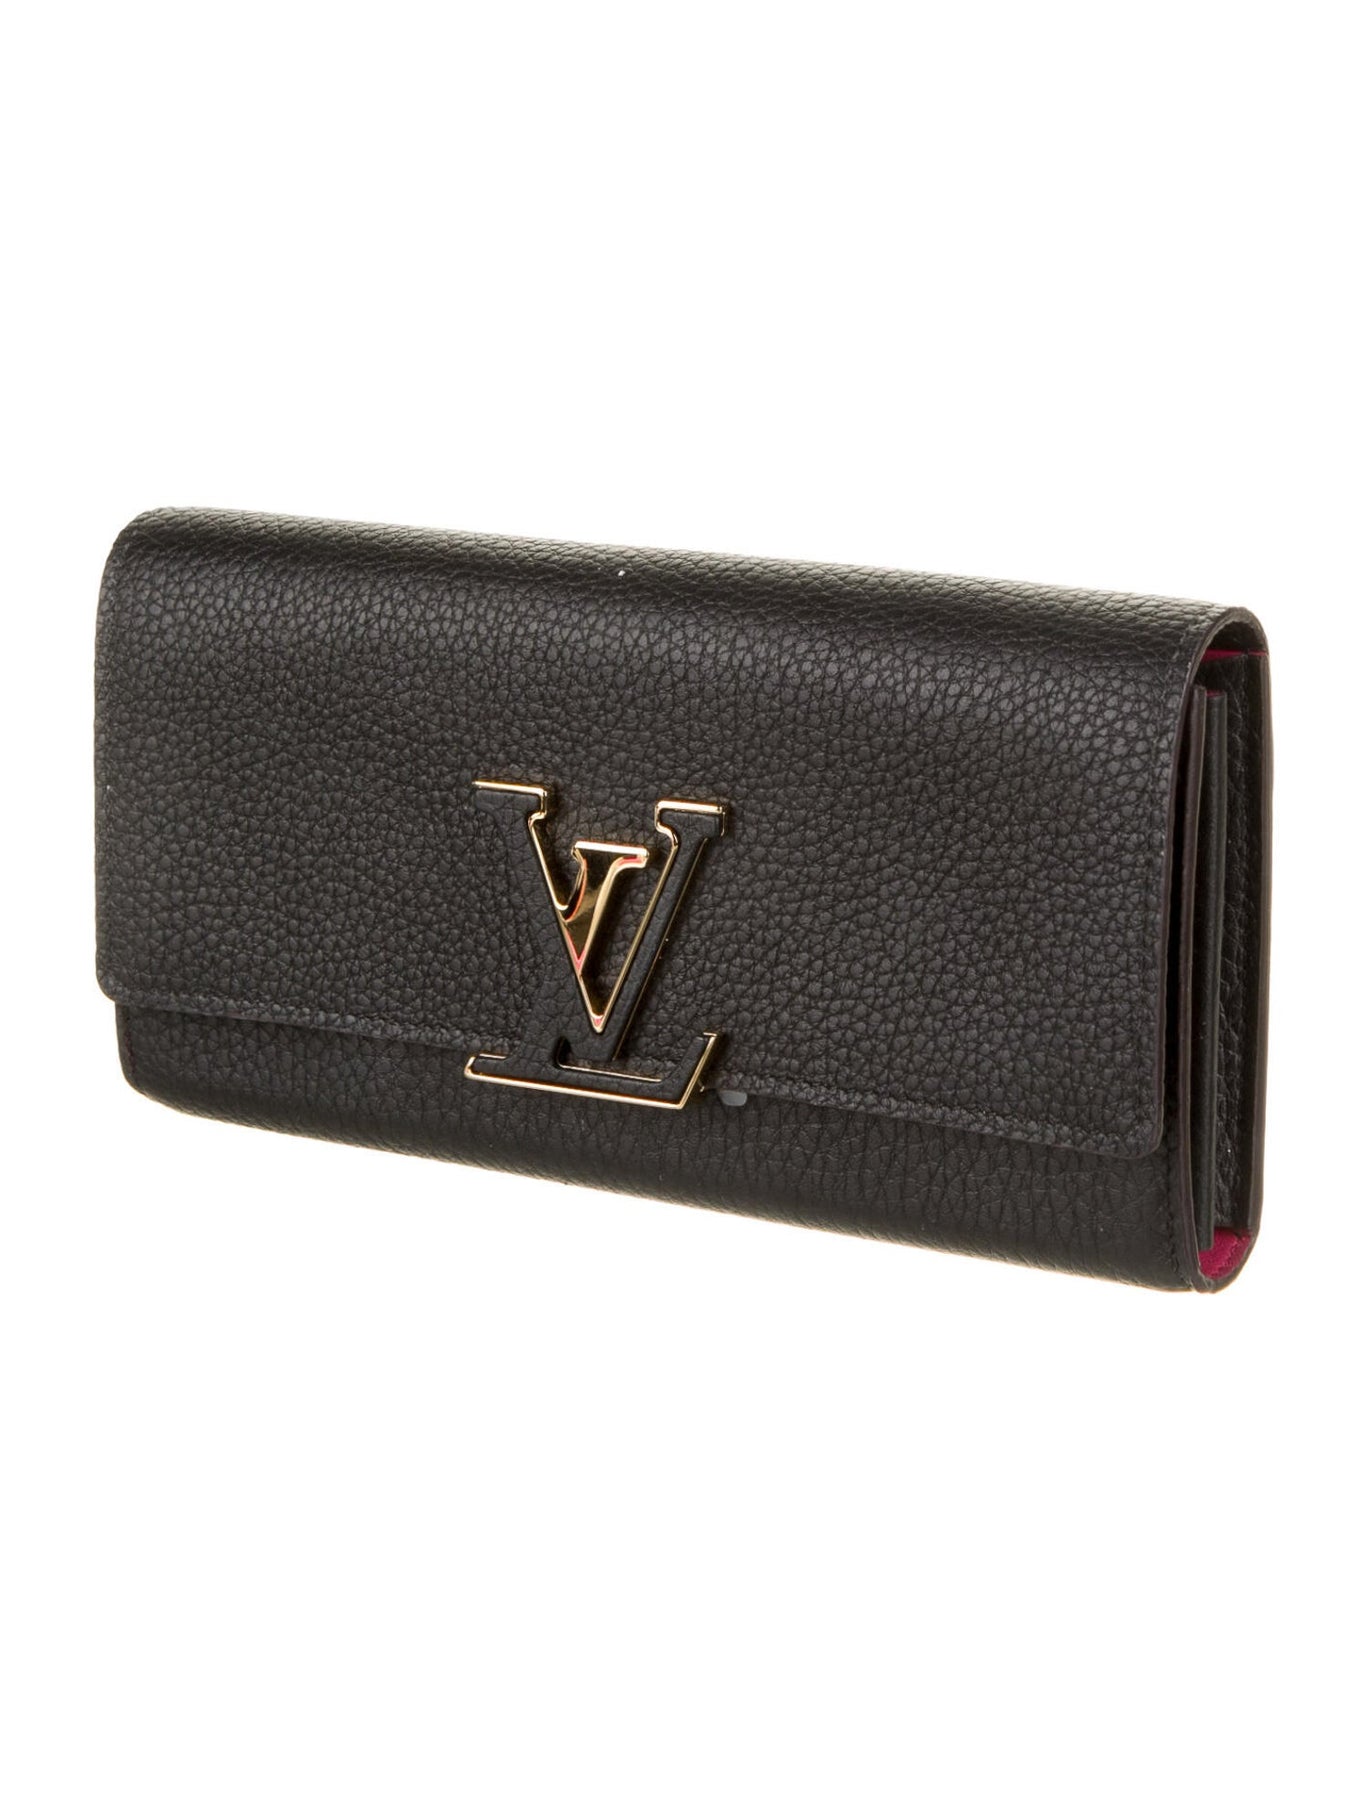 Louis Vuitton - Authenticated Capucines Wallet - Leather Black Plain for Women, Very Good Condition